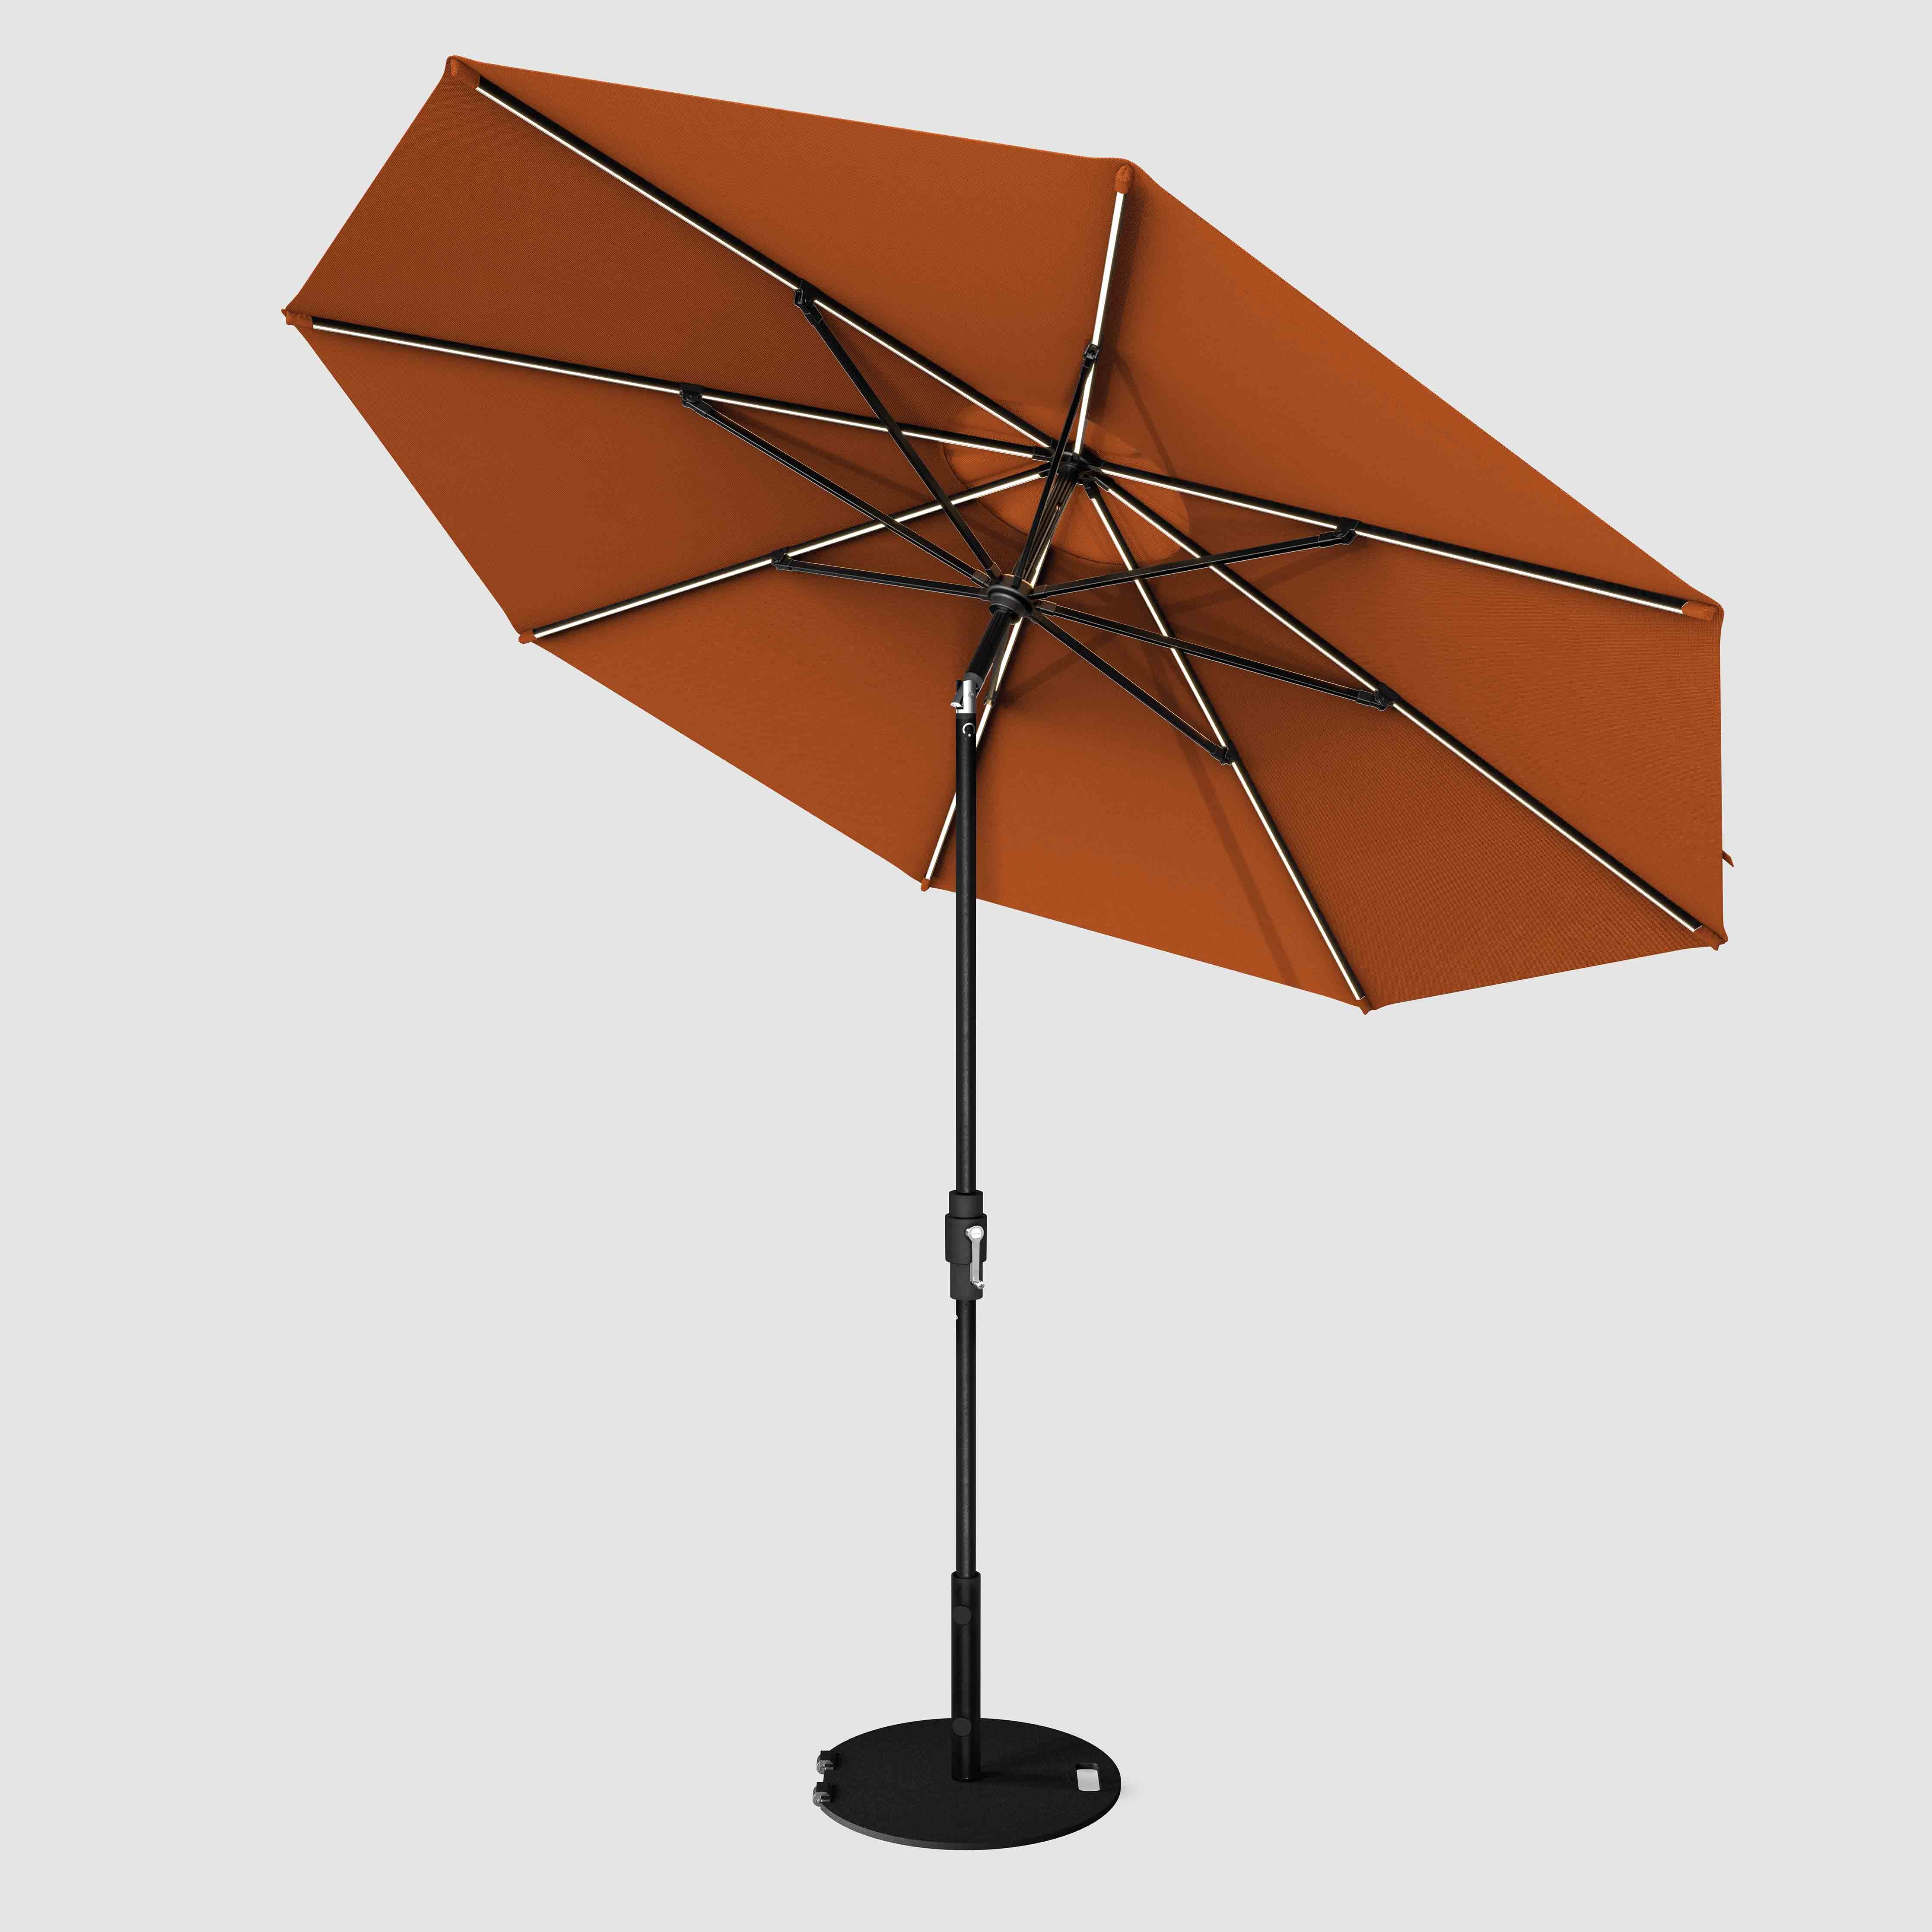 El LED Swilt™ - Sunbrella Terracota